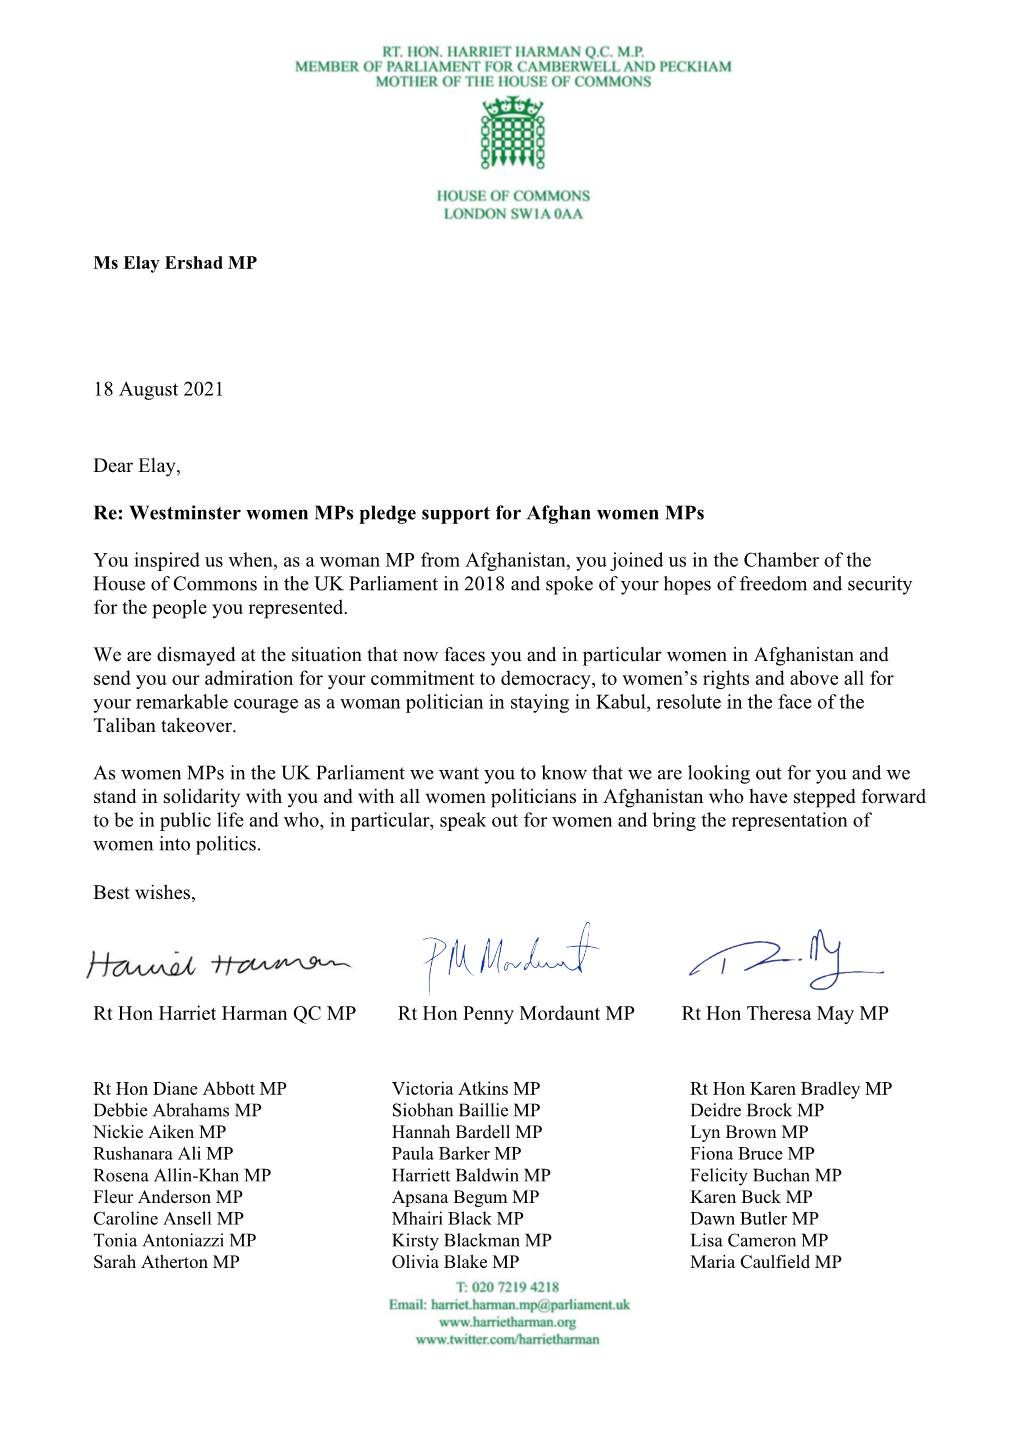 18 August 2021 Dear Elay, Re: Westminster Women Mps Pledge